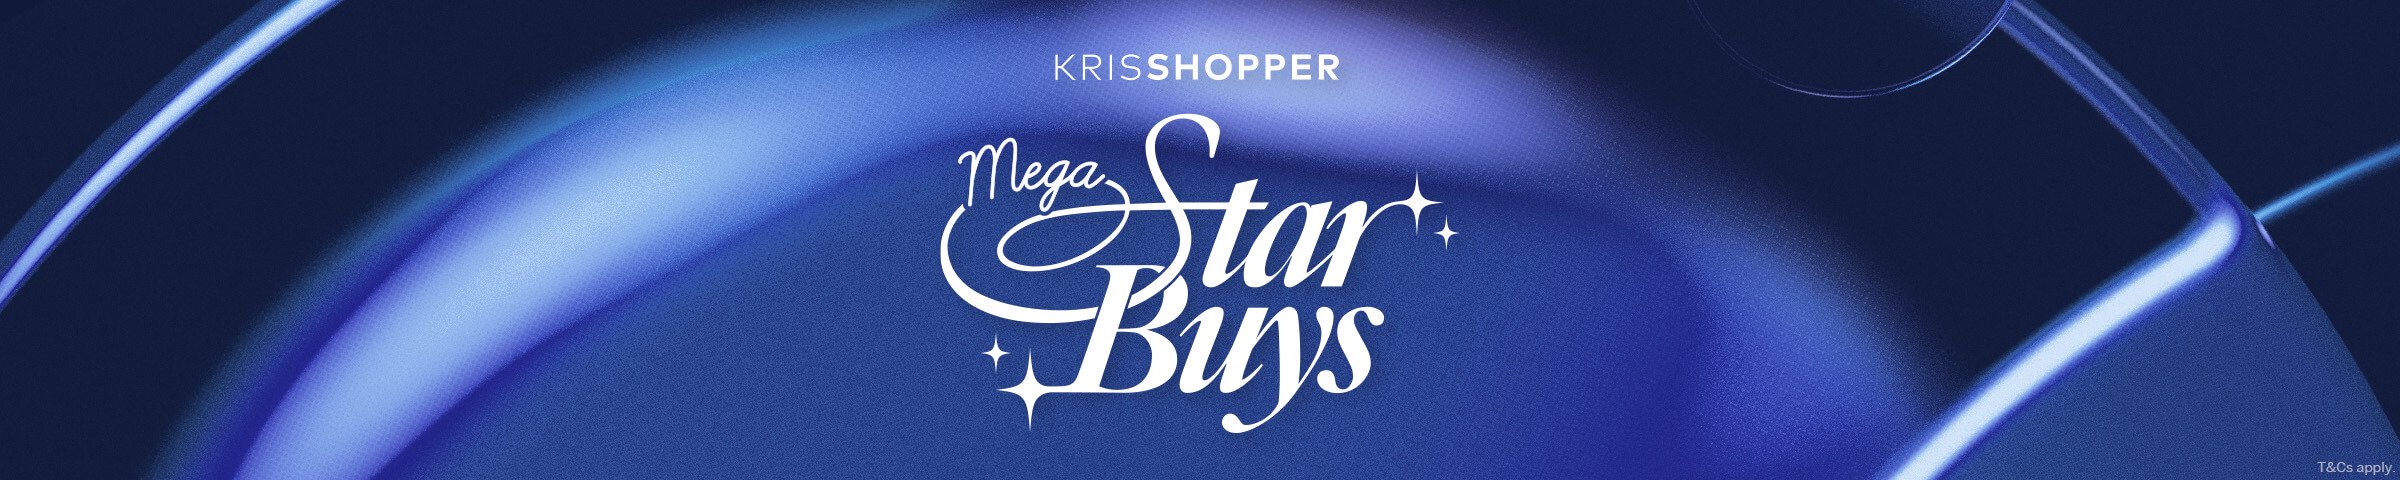 KrisShopper Mega Starbuys